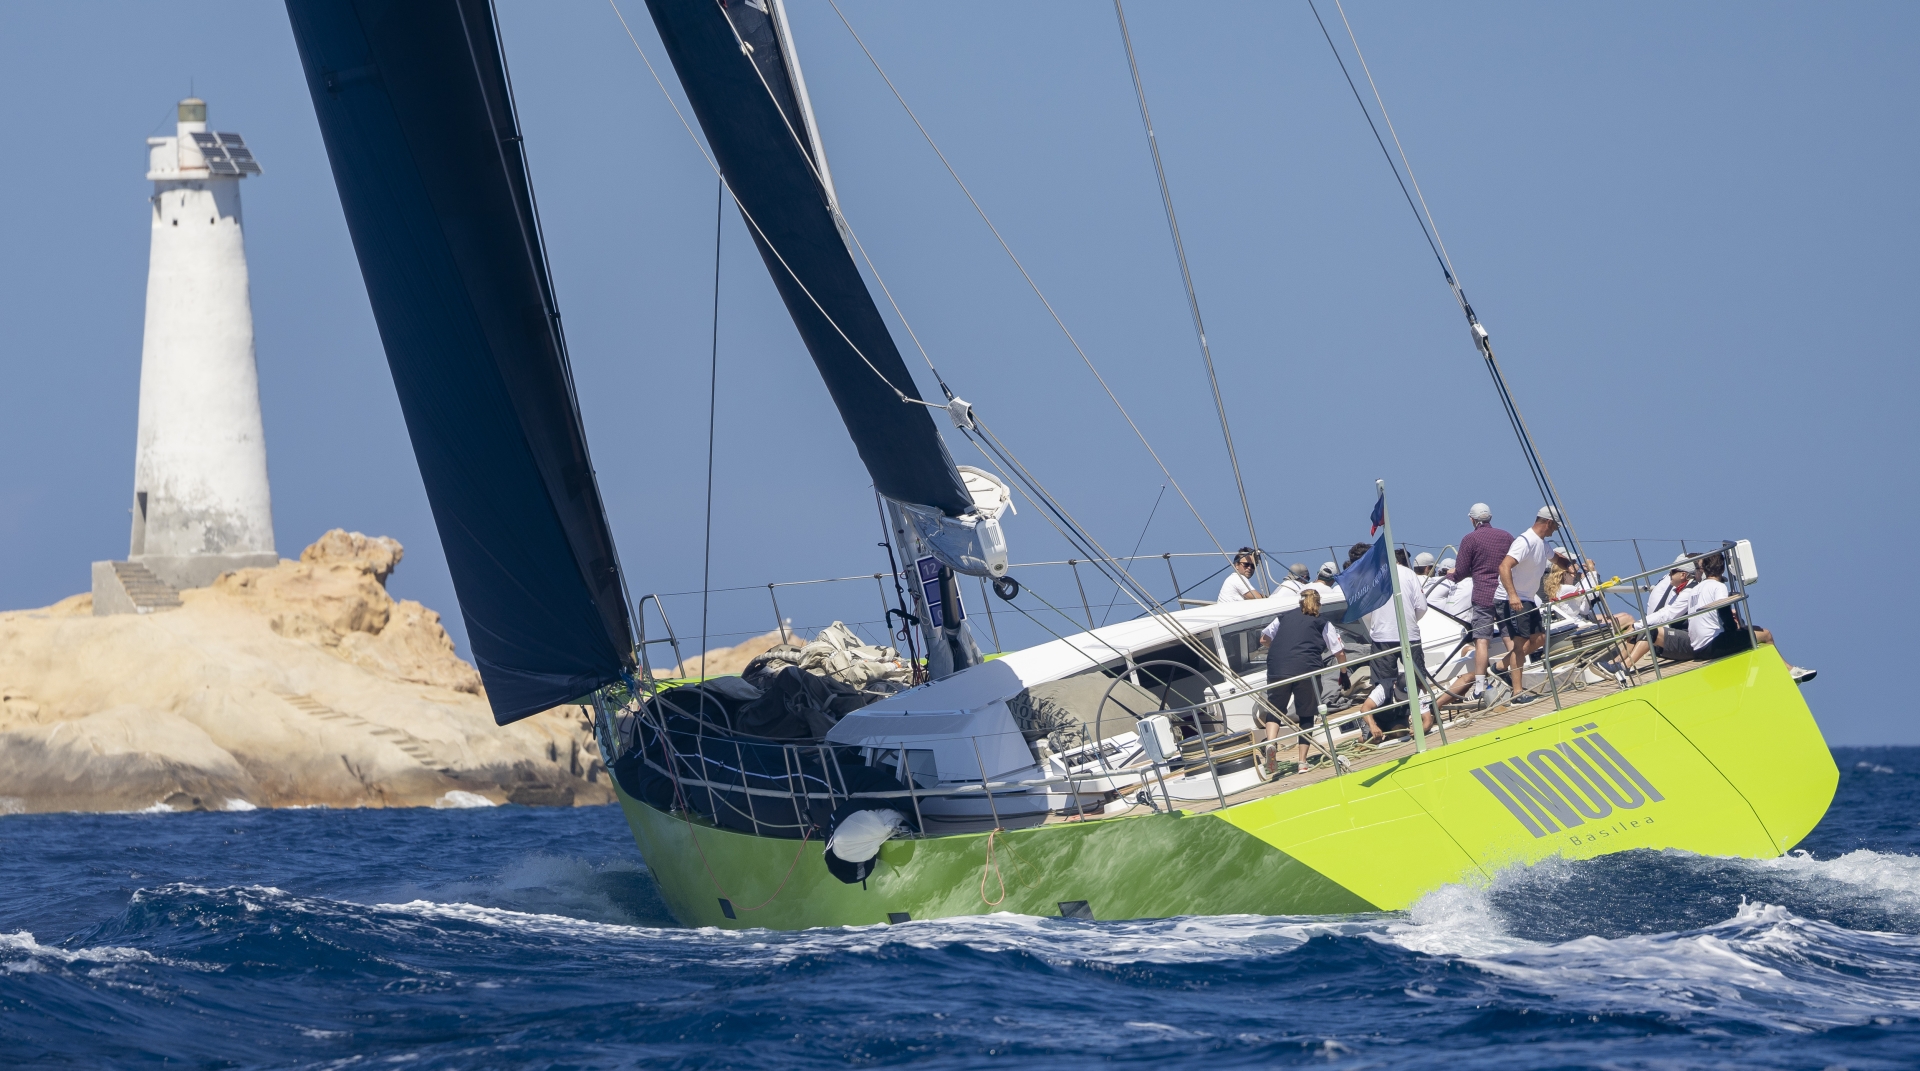 Giorgio Armani Superyacht Regatta Day Two: Sardinia puts on its best show - NEWS - Yacht Club Costa Smeralda